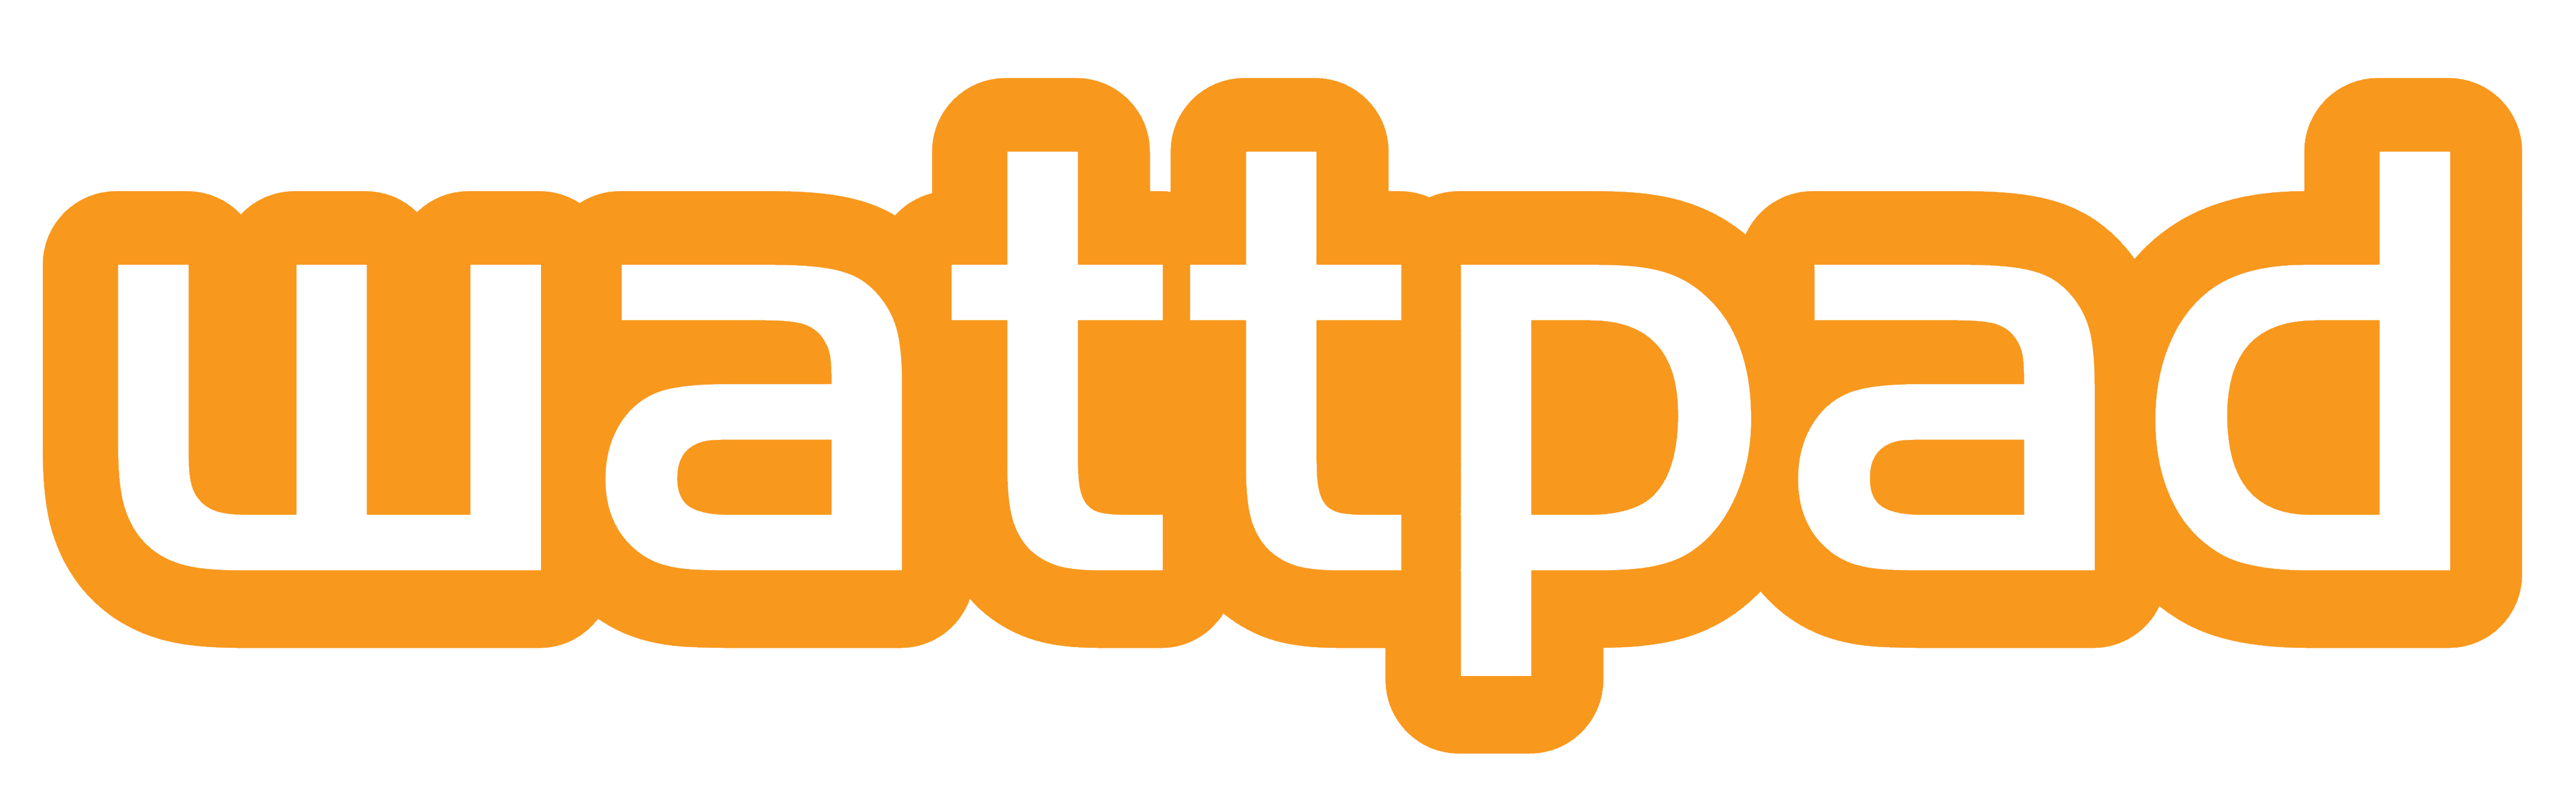 Wattpad logo, logotype